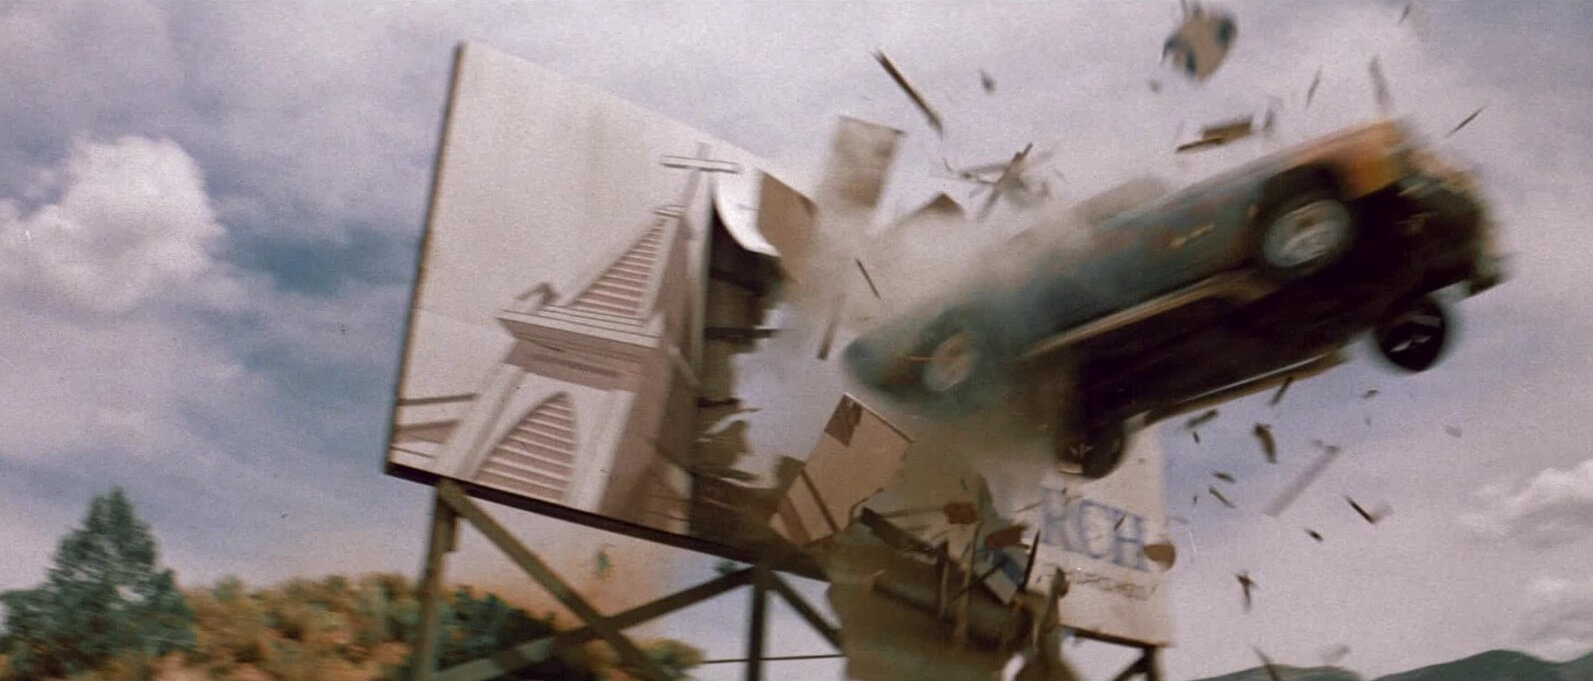 Robert Herron's stunt. Convoy (1978; Sam Peckinpah).